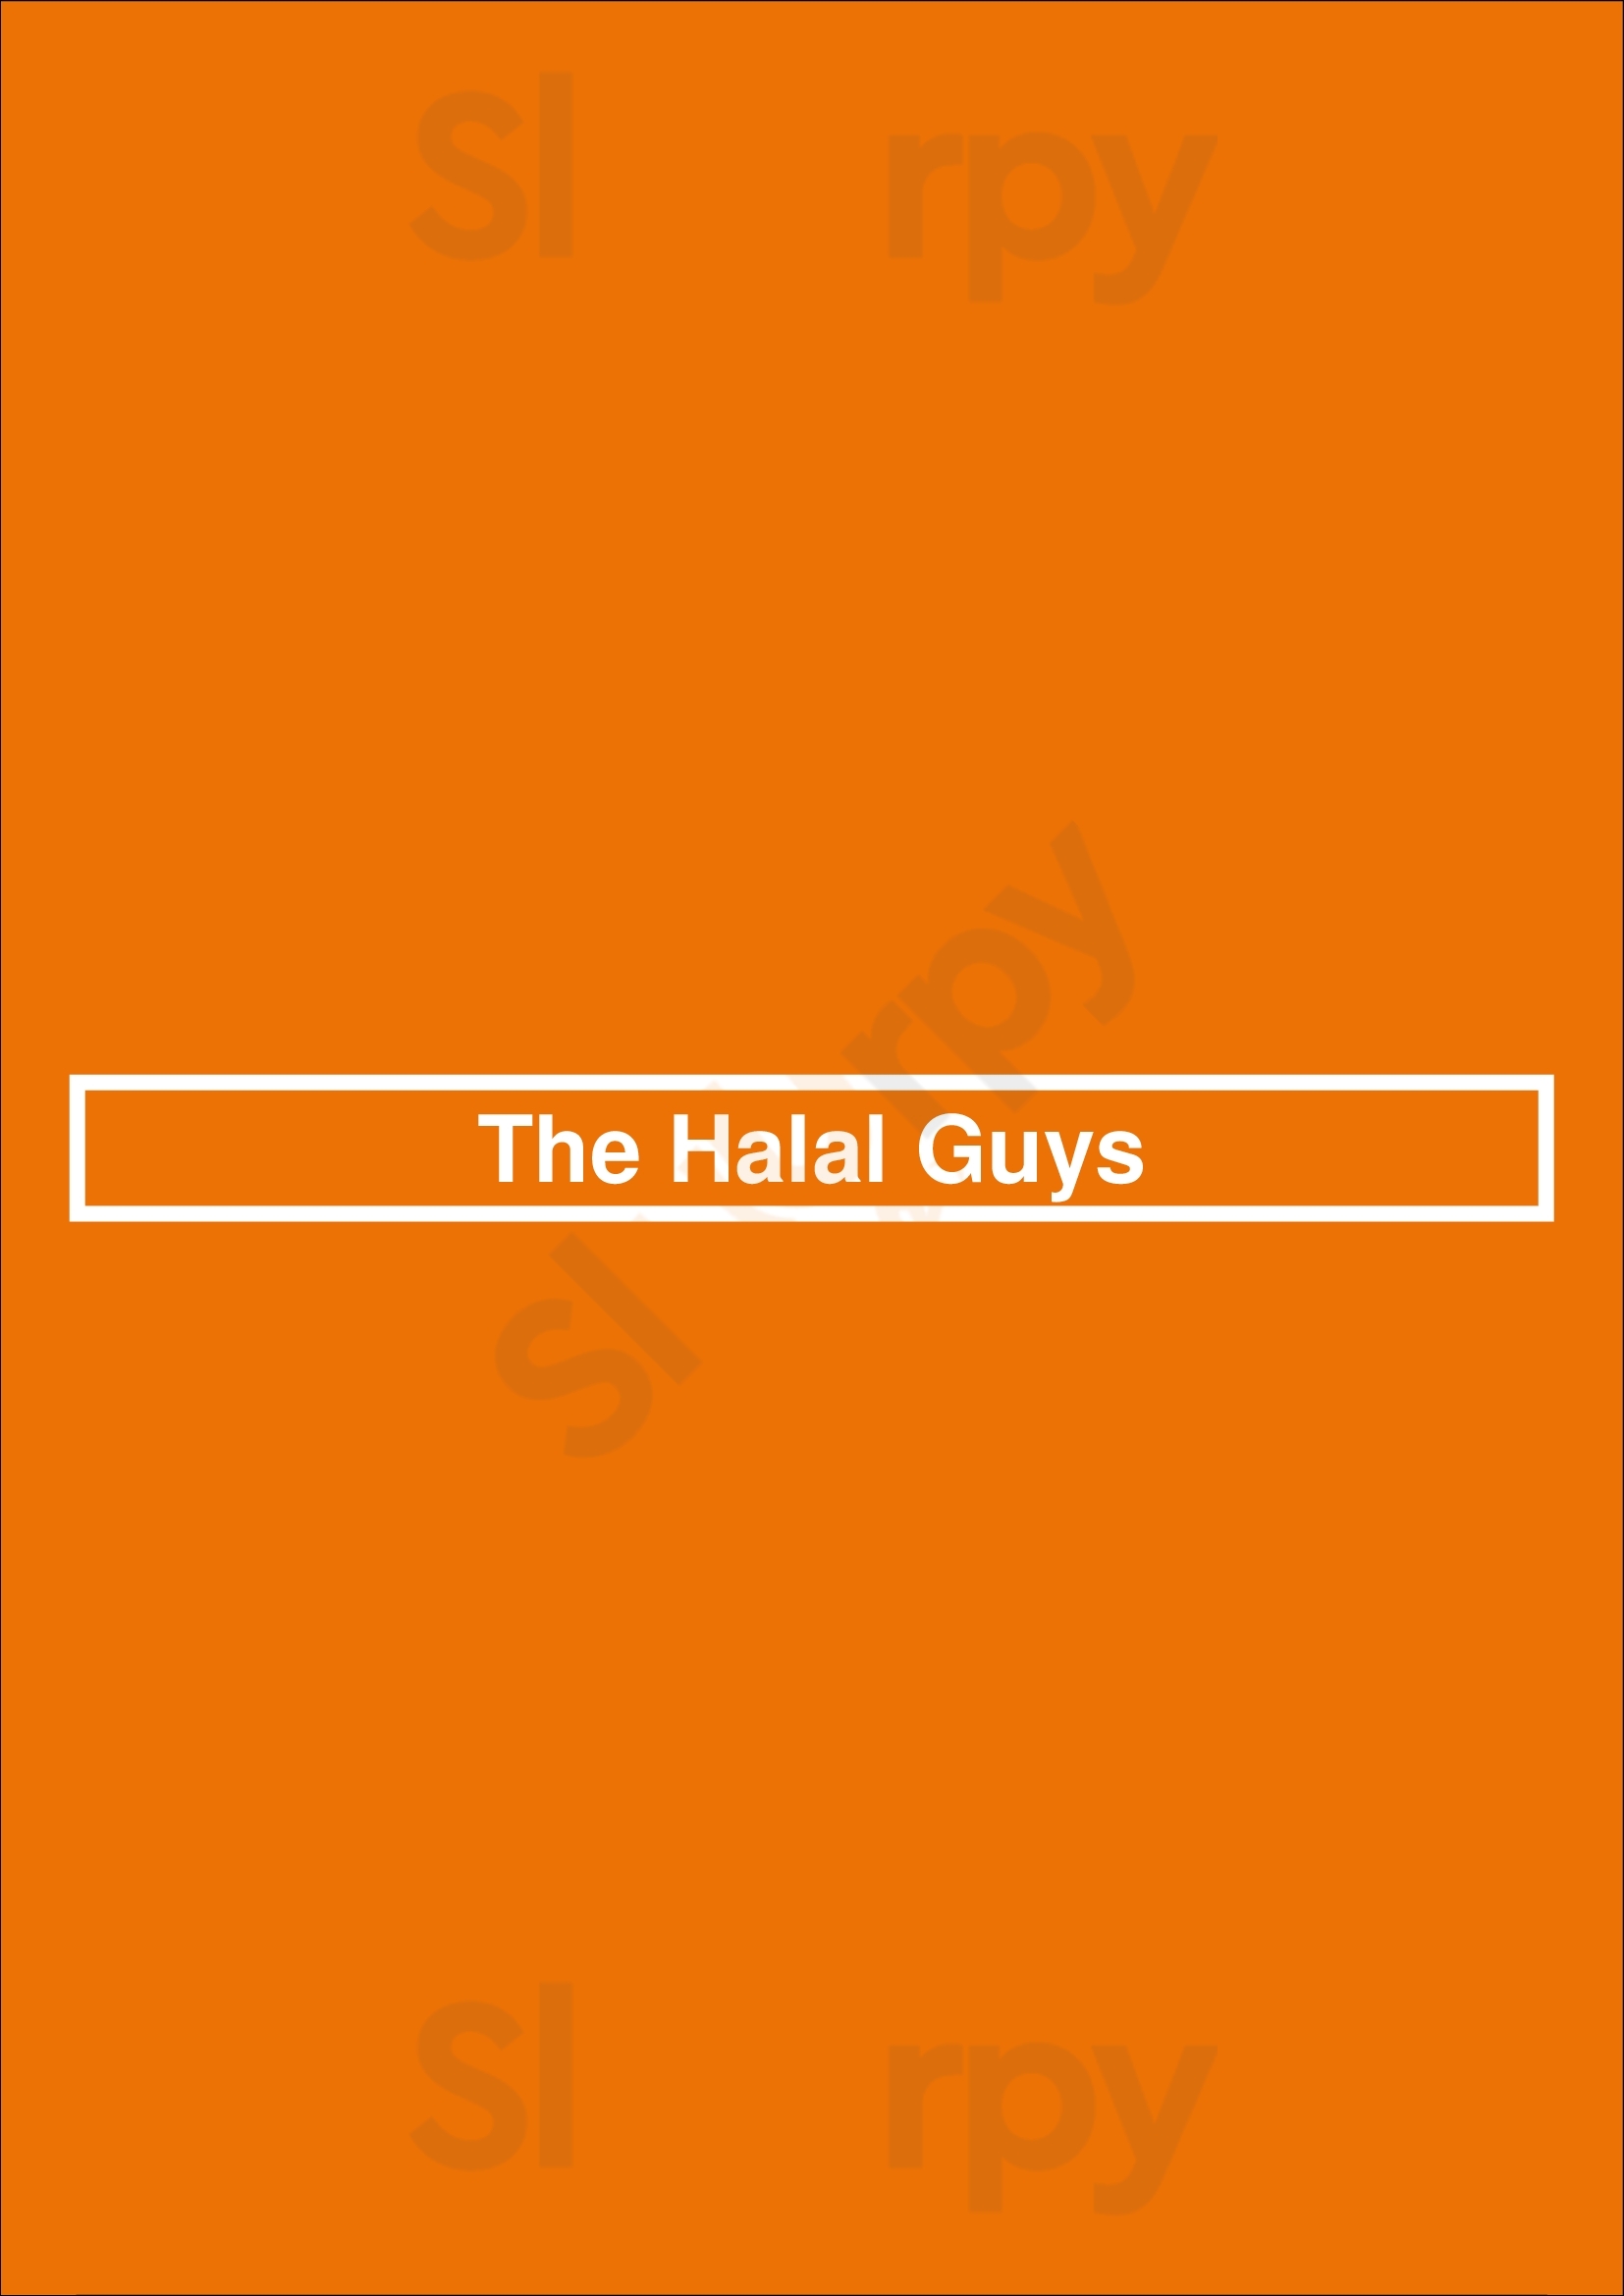 The Halal Guys Seattle Menu - 1